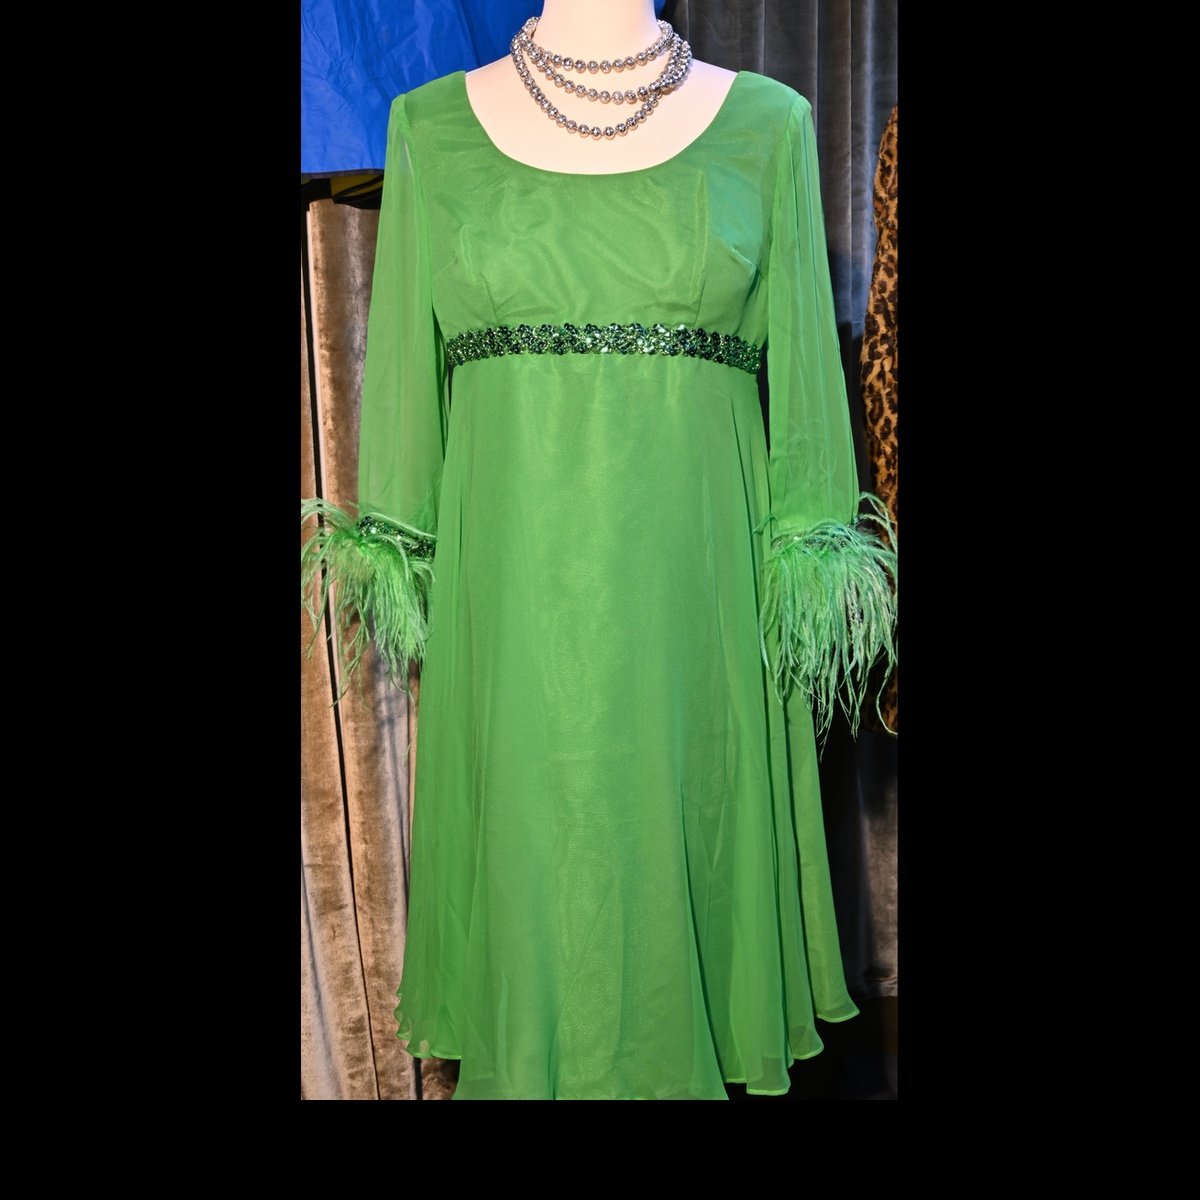 c.1965 Green cocktail dress